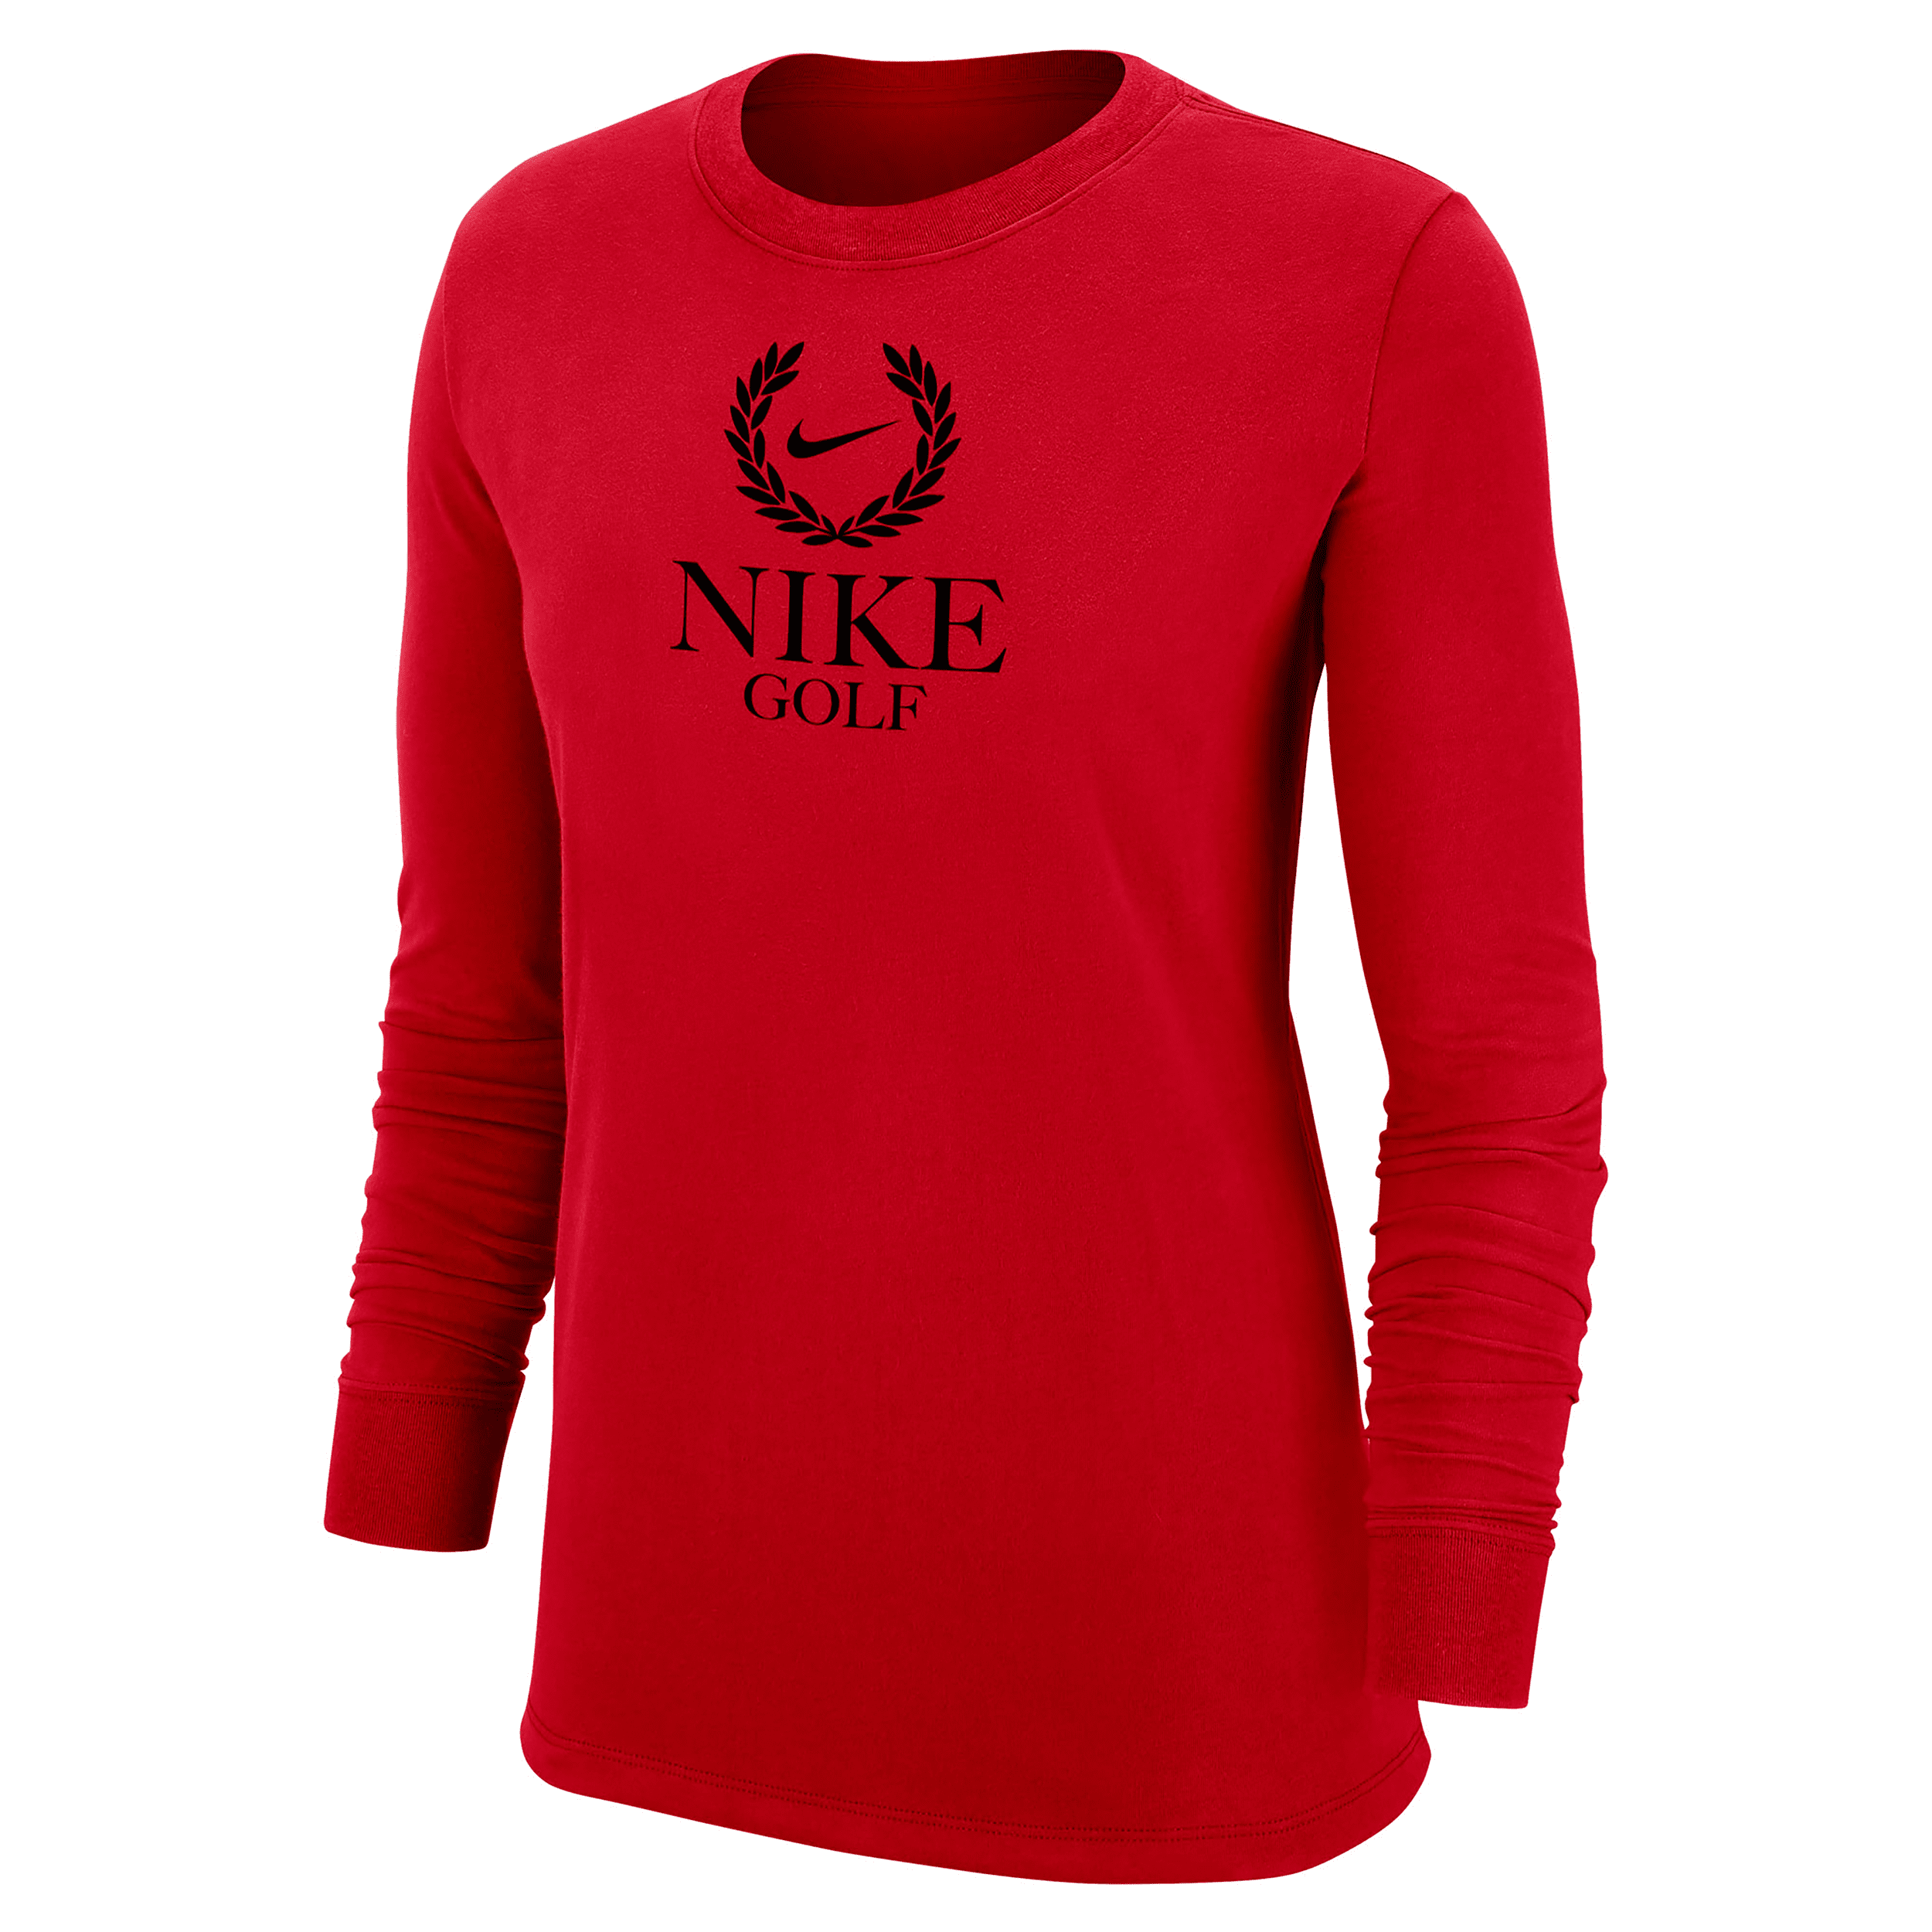 Nike Women's Golf Long-sleeve T-shirt In Red